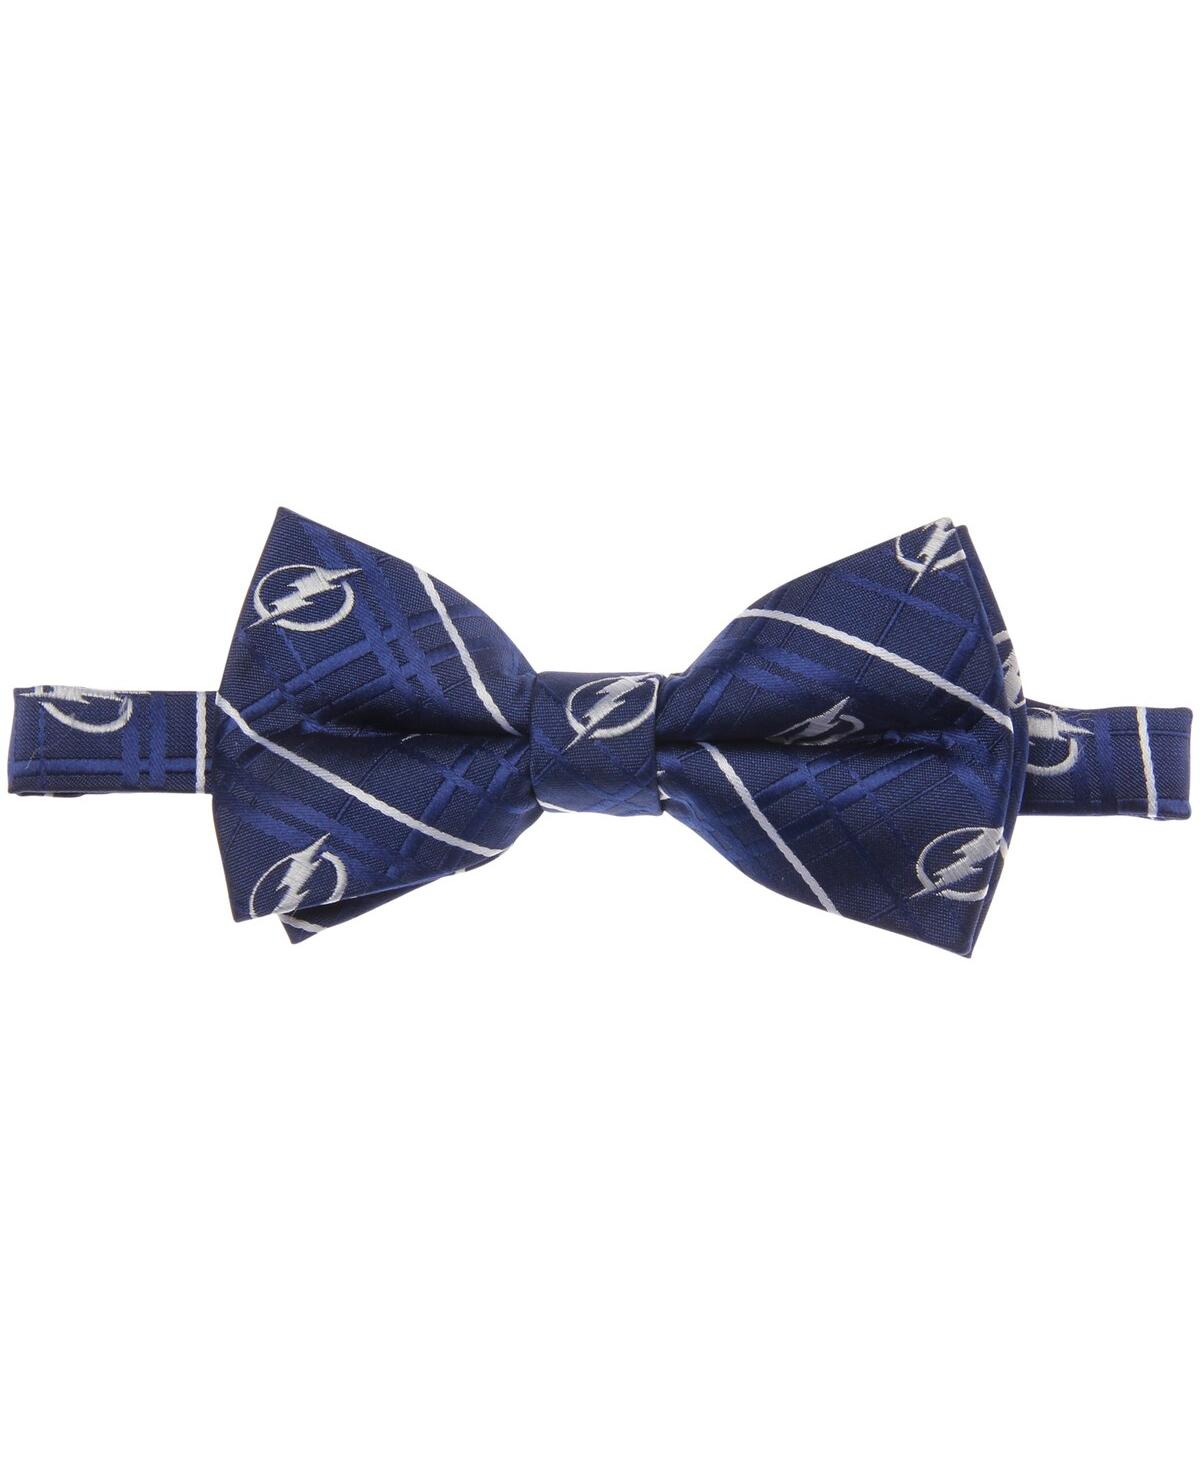 Men's Tampa Bay Lightning Oxford Bow Tie - Navy